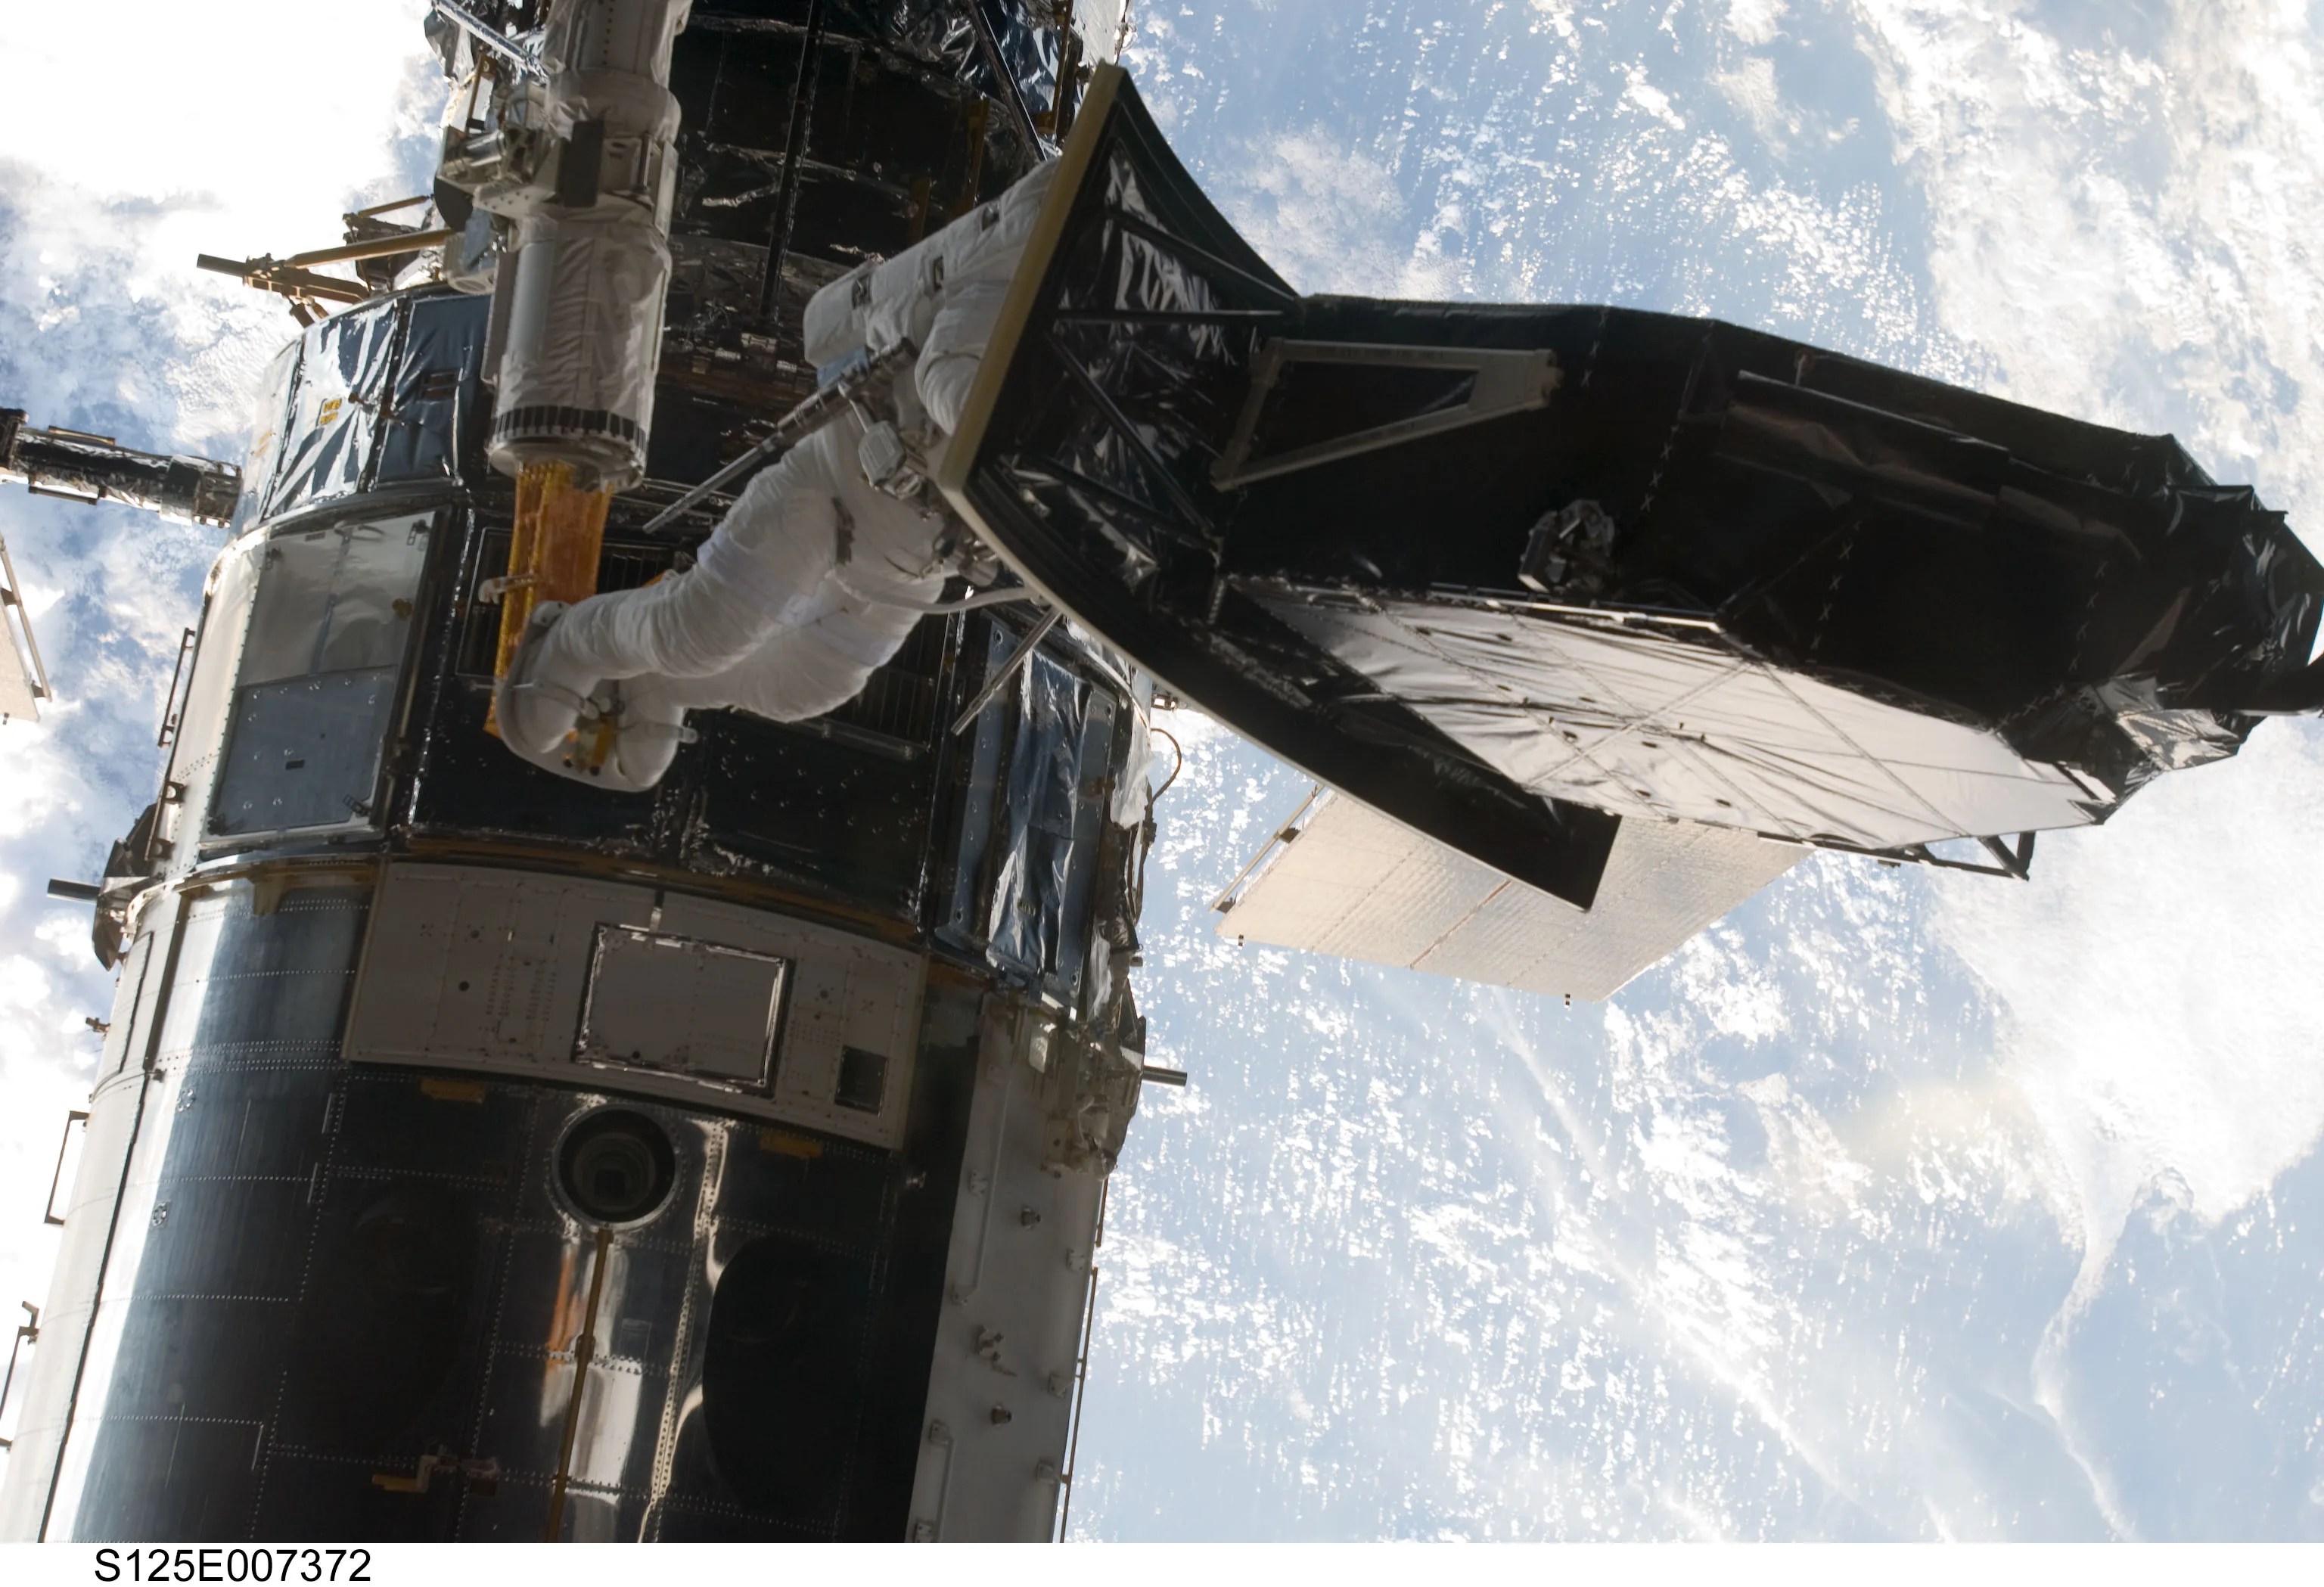 astronaut works on Hubble